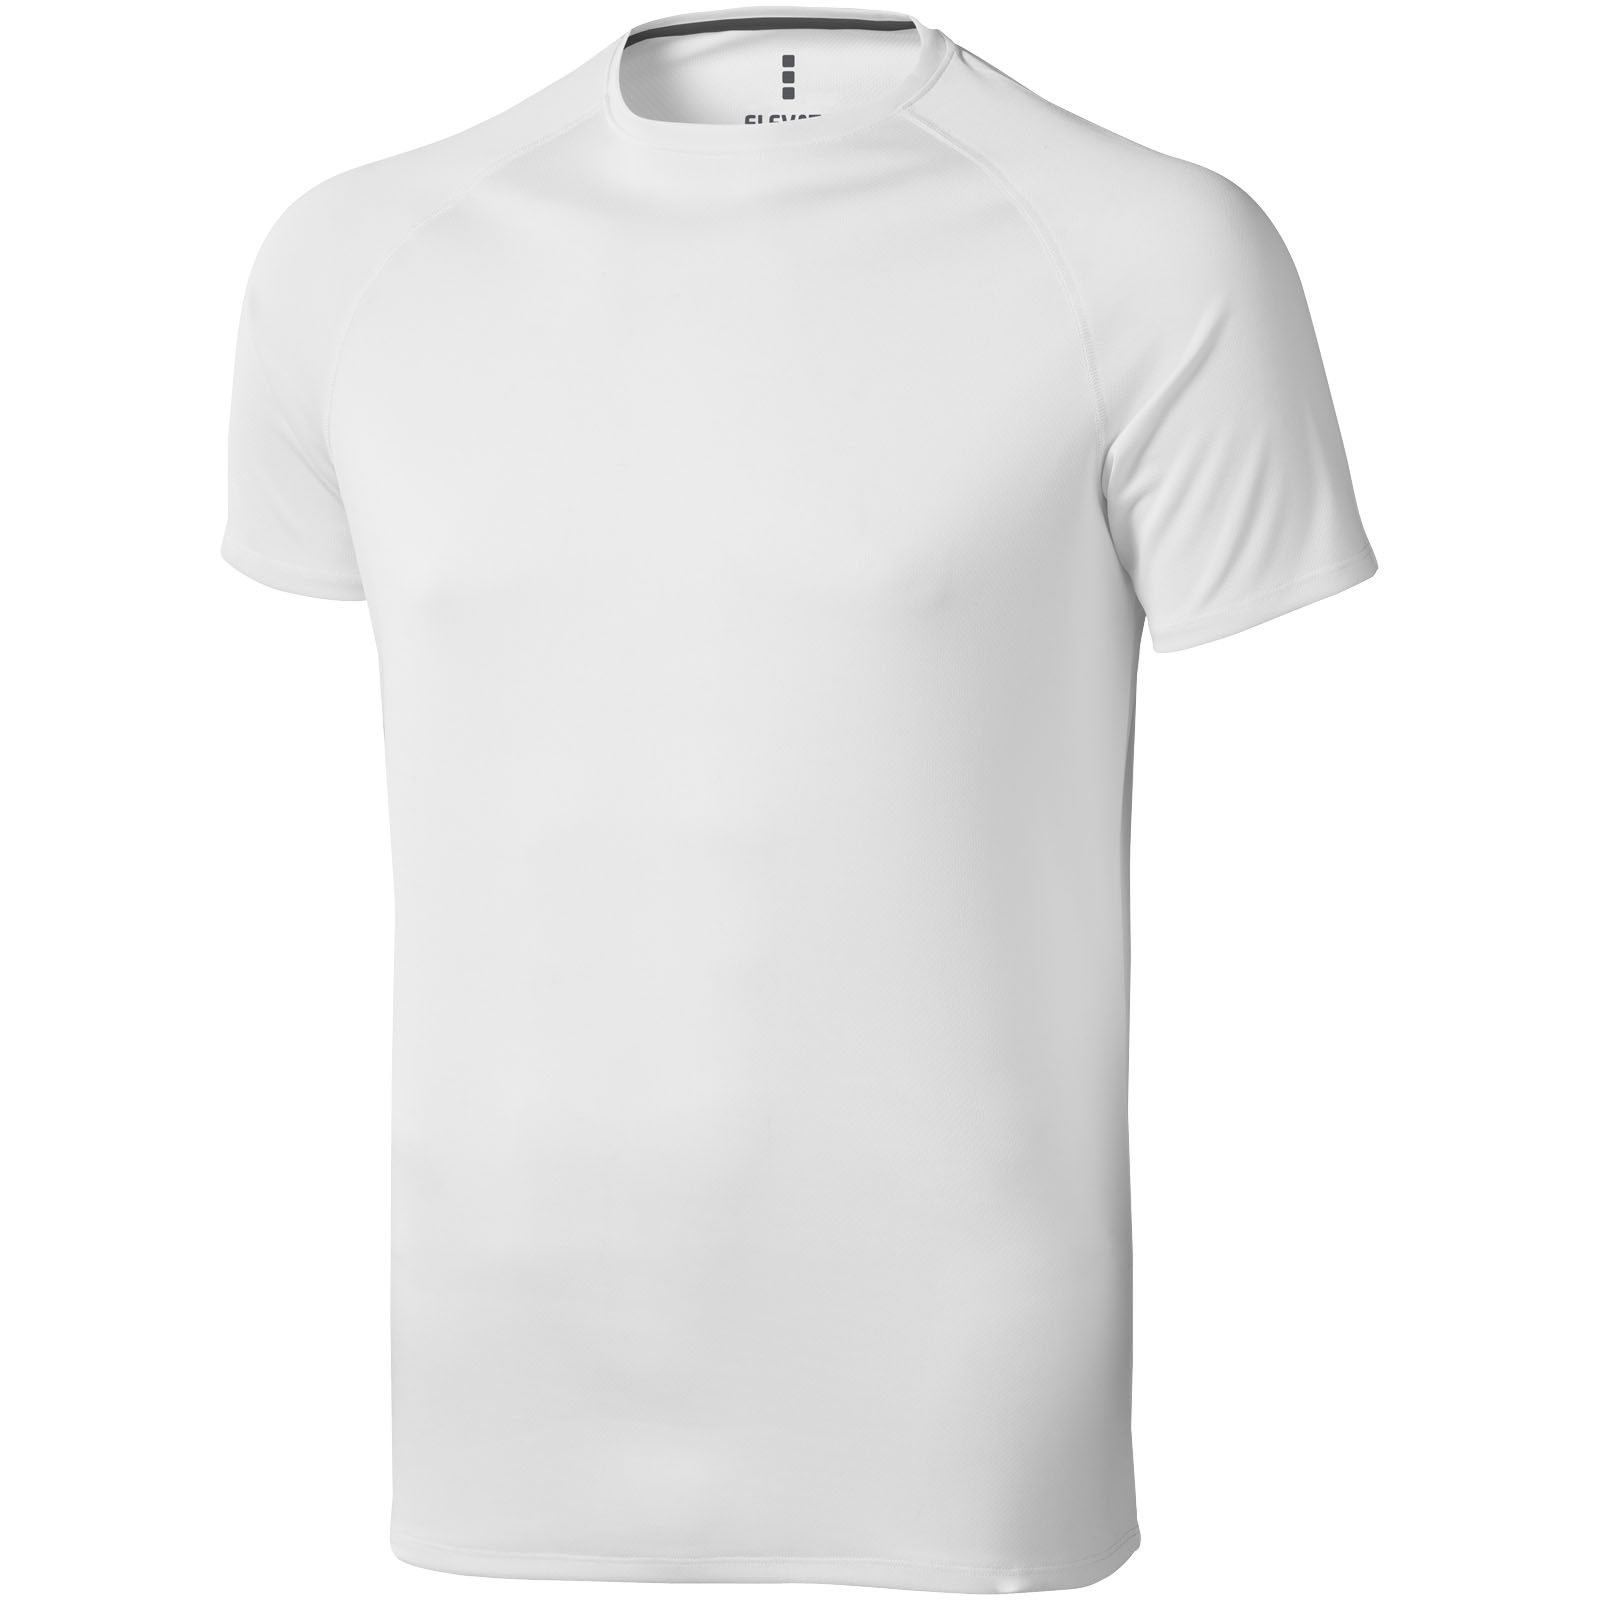 Clothing - Niagara short sleeve men's cool fit t-shirt